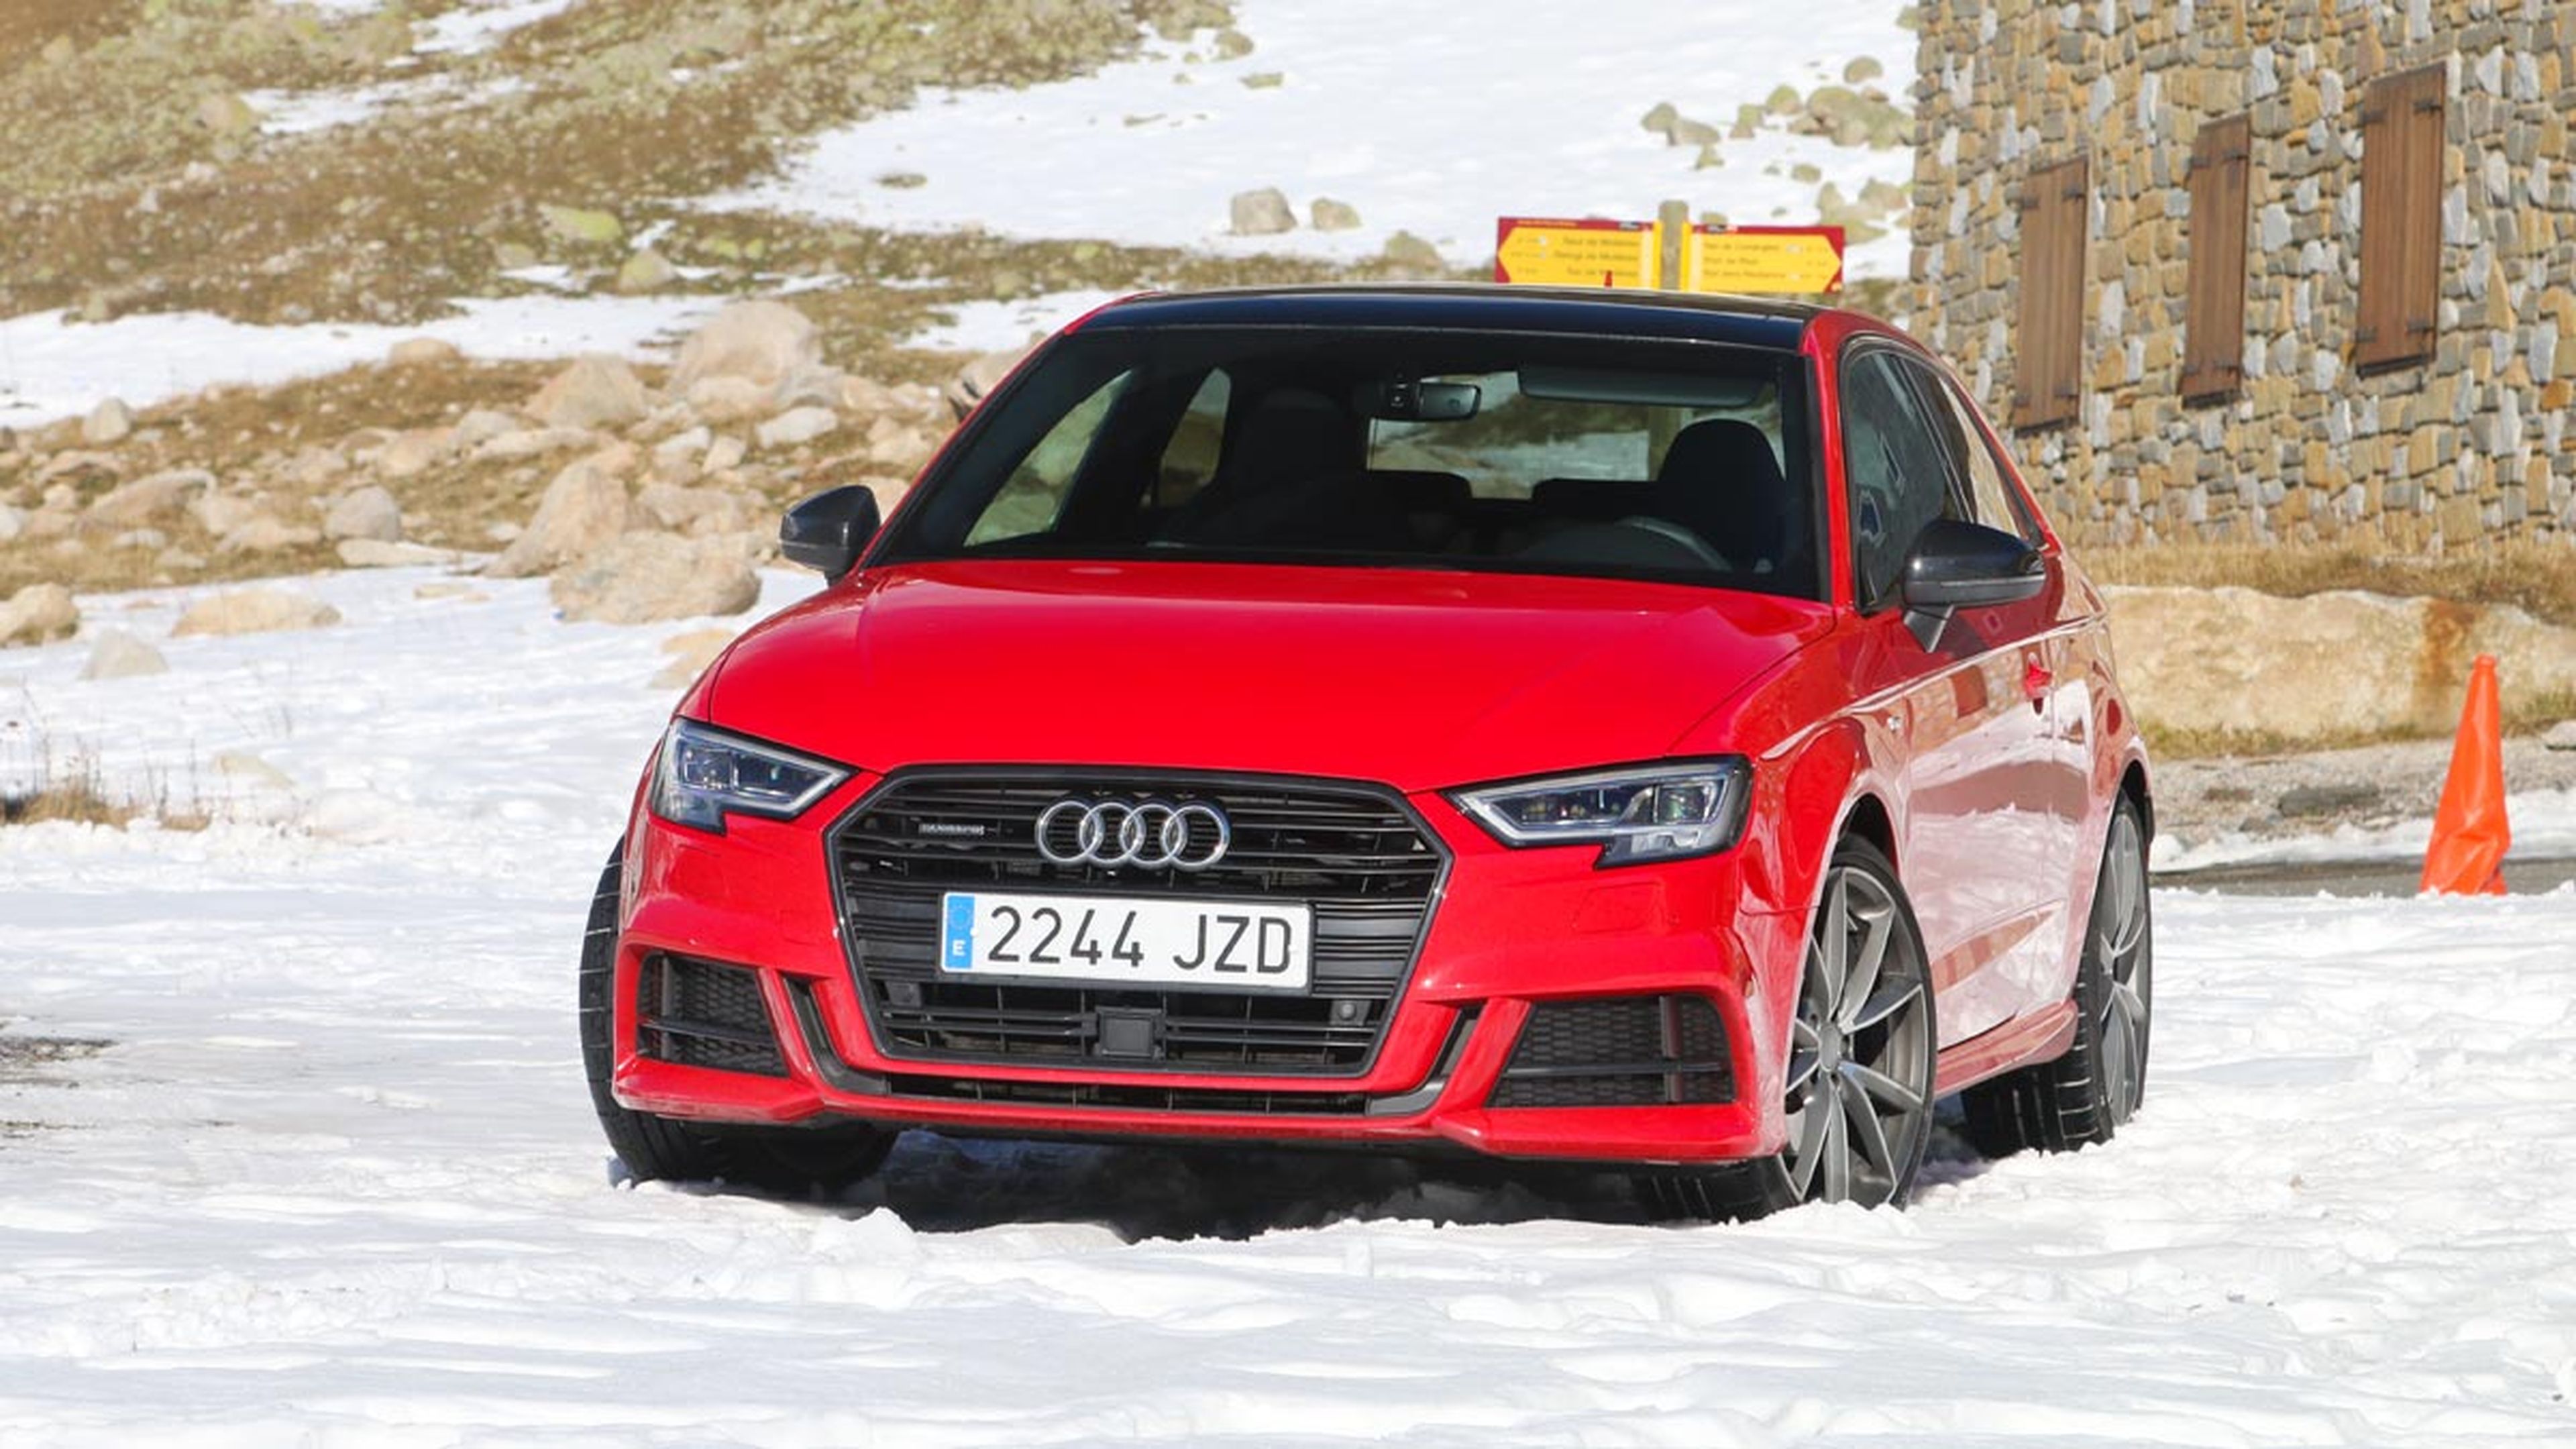 Prueba Audi A3 Quattro en nieve